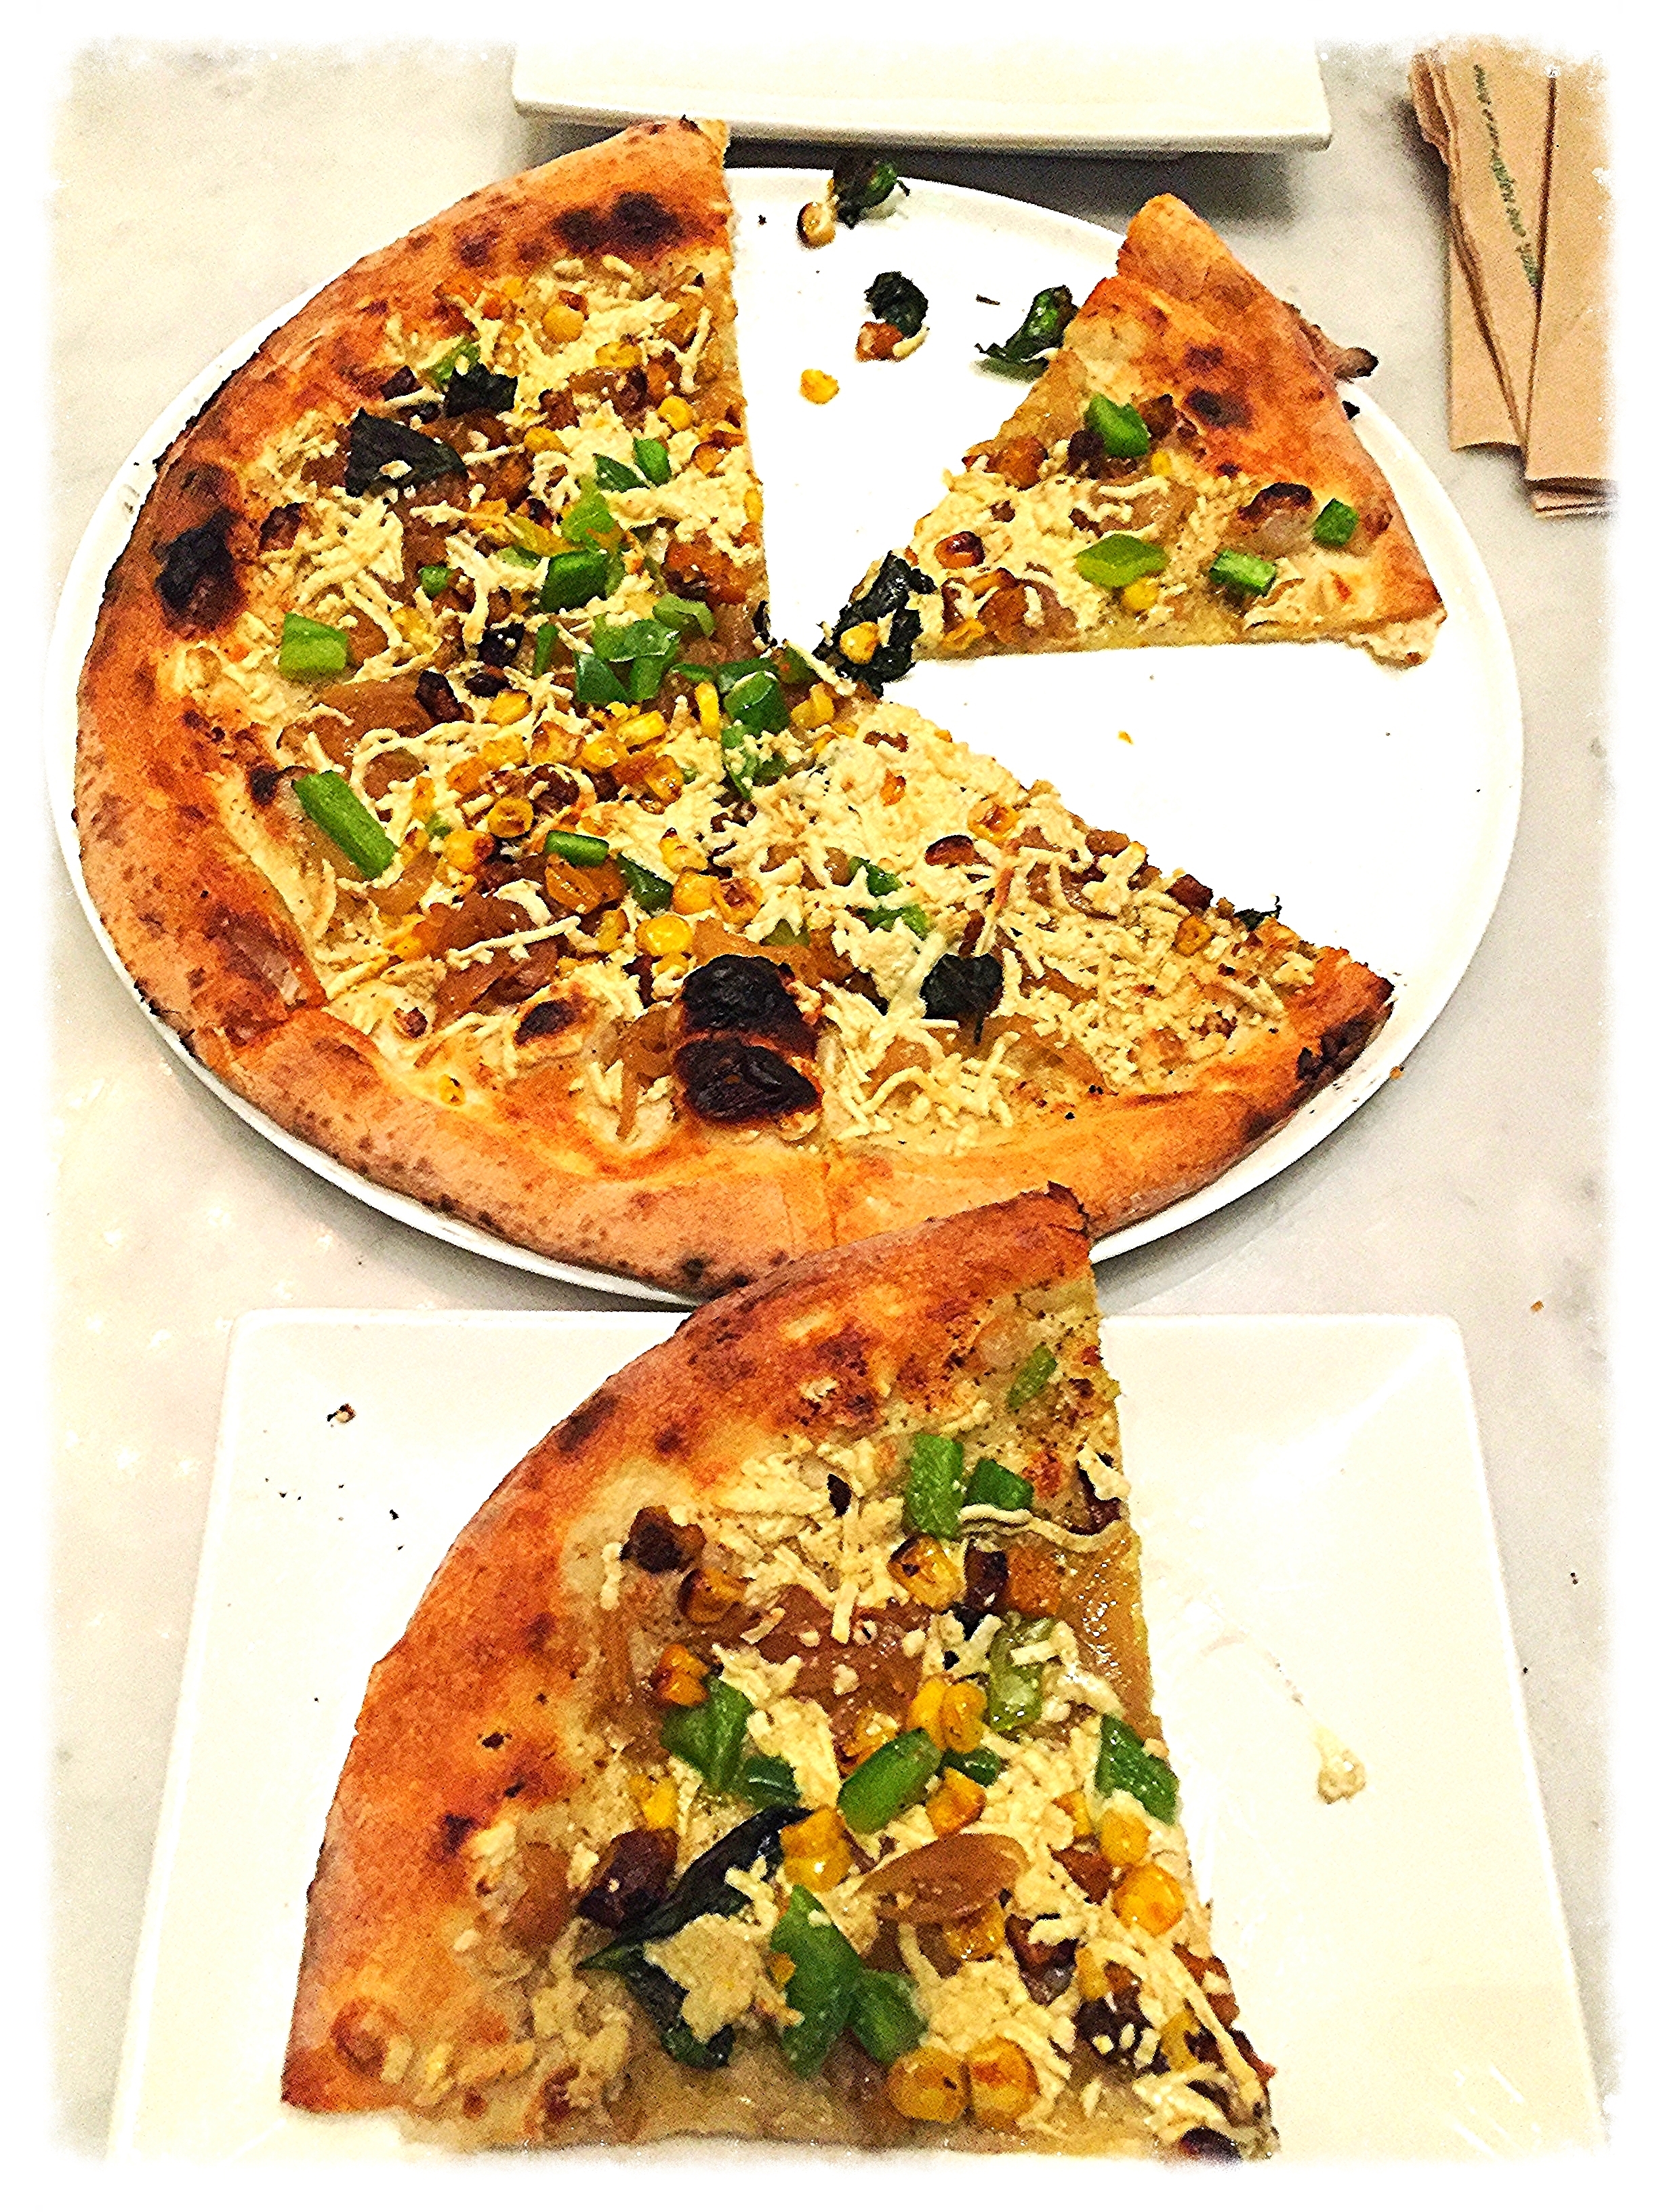 Vegan Zucca pizza from 800 Degrees Neopolitan Pizzeria